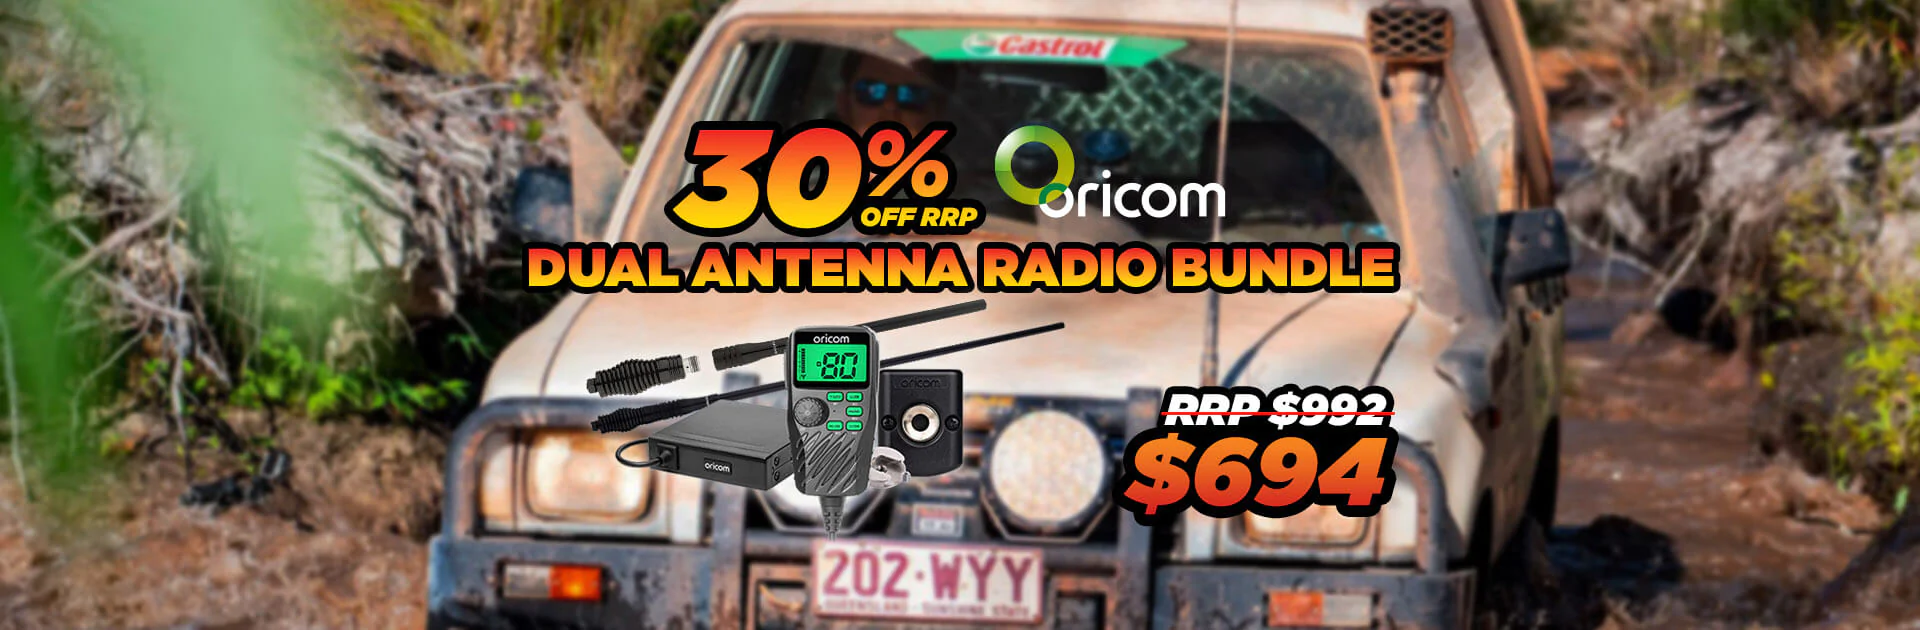 30% OFF RRP Oricom Dual Antenna Radio bundle now $694 at 4WD 24/7